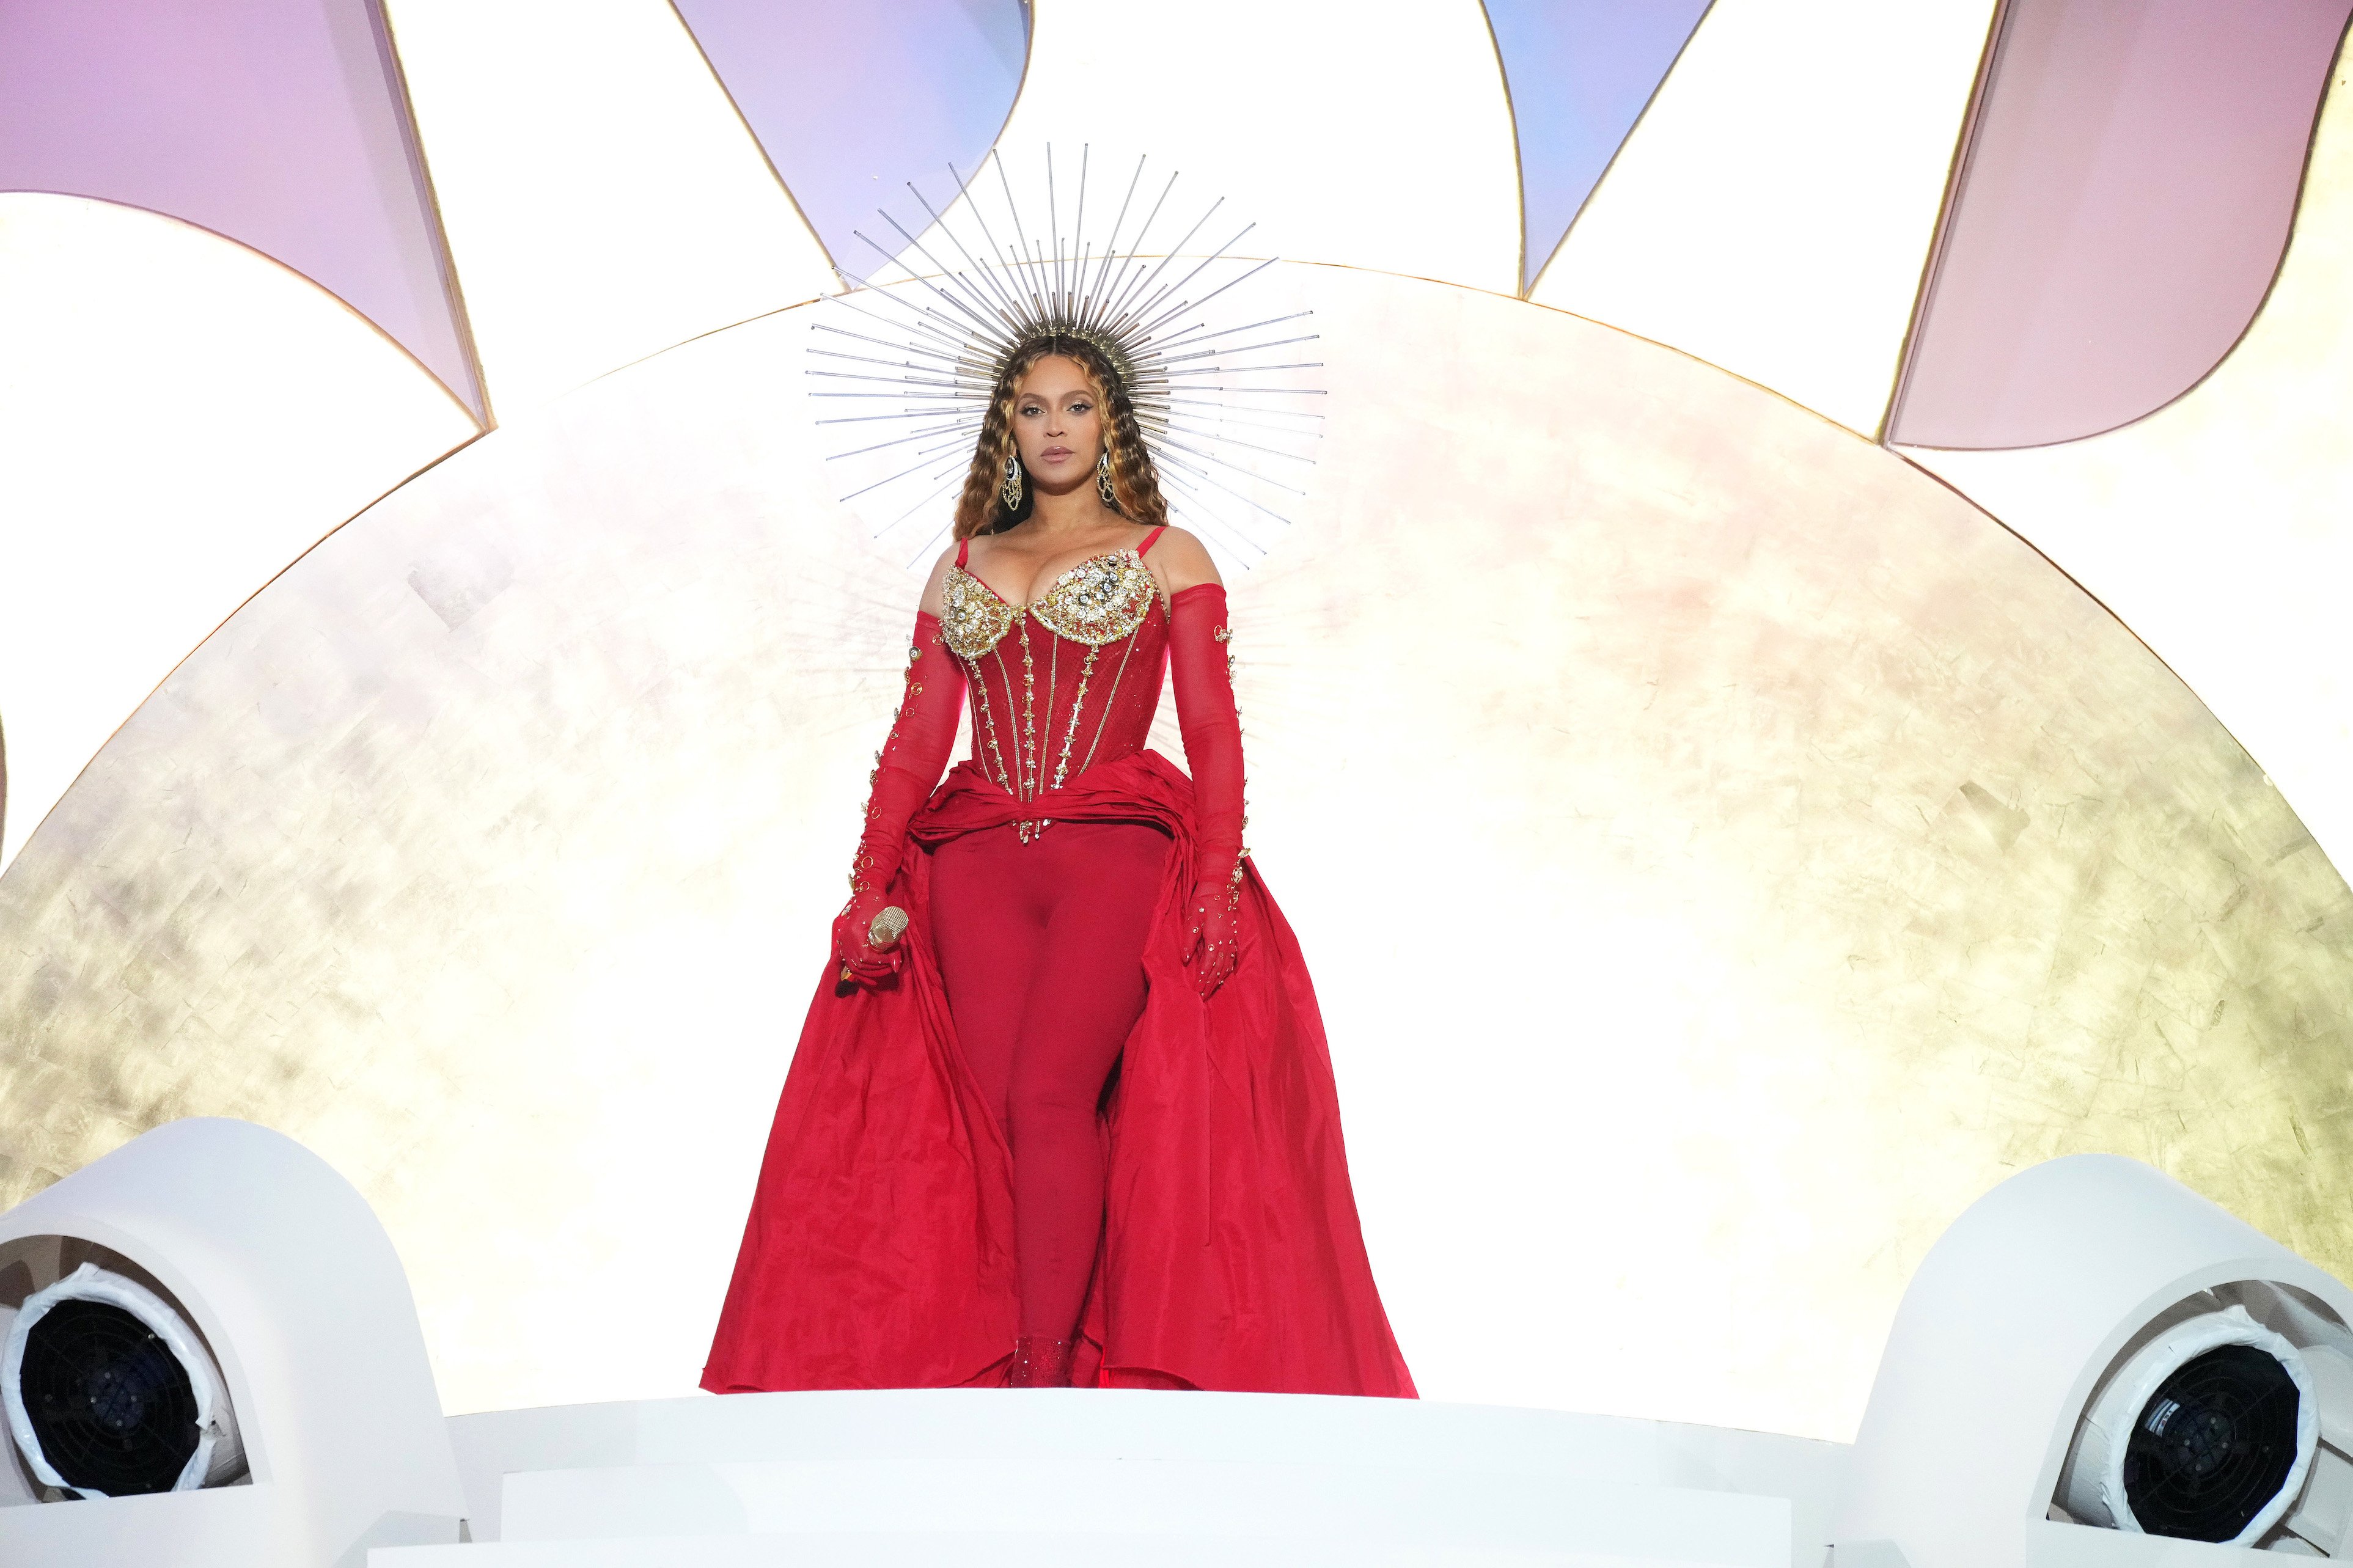 Beyoncé performs on stage headlining the Grand Reveal of Dubai's newest luxury hotel, Atlantis The Royal